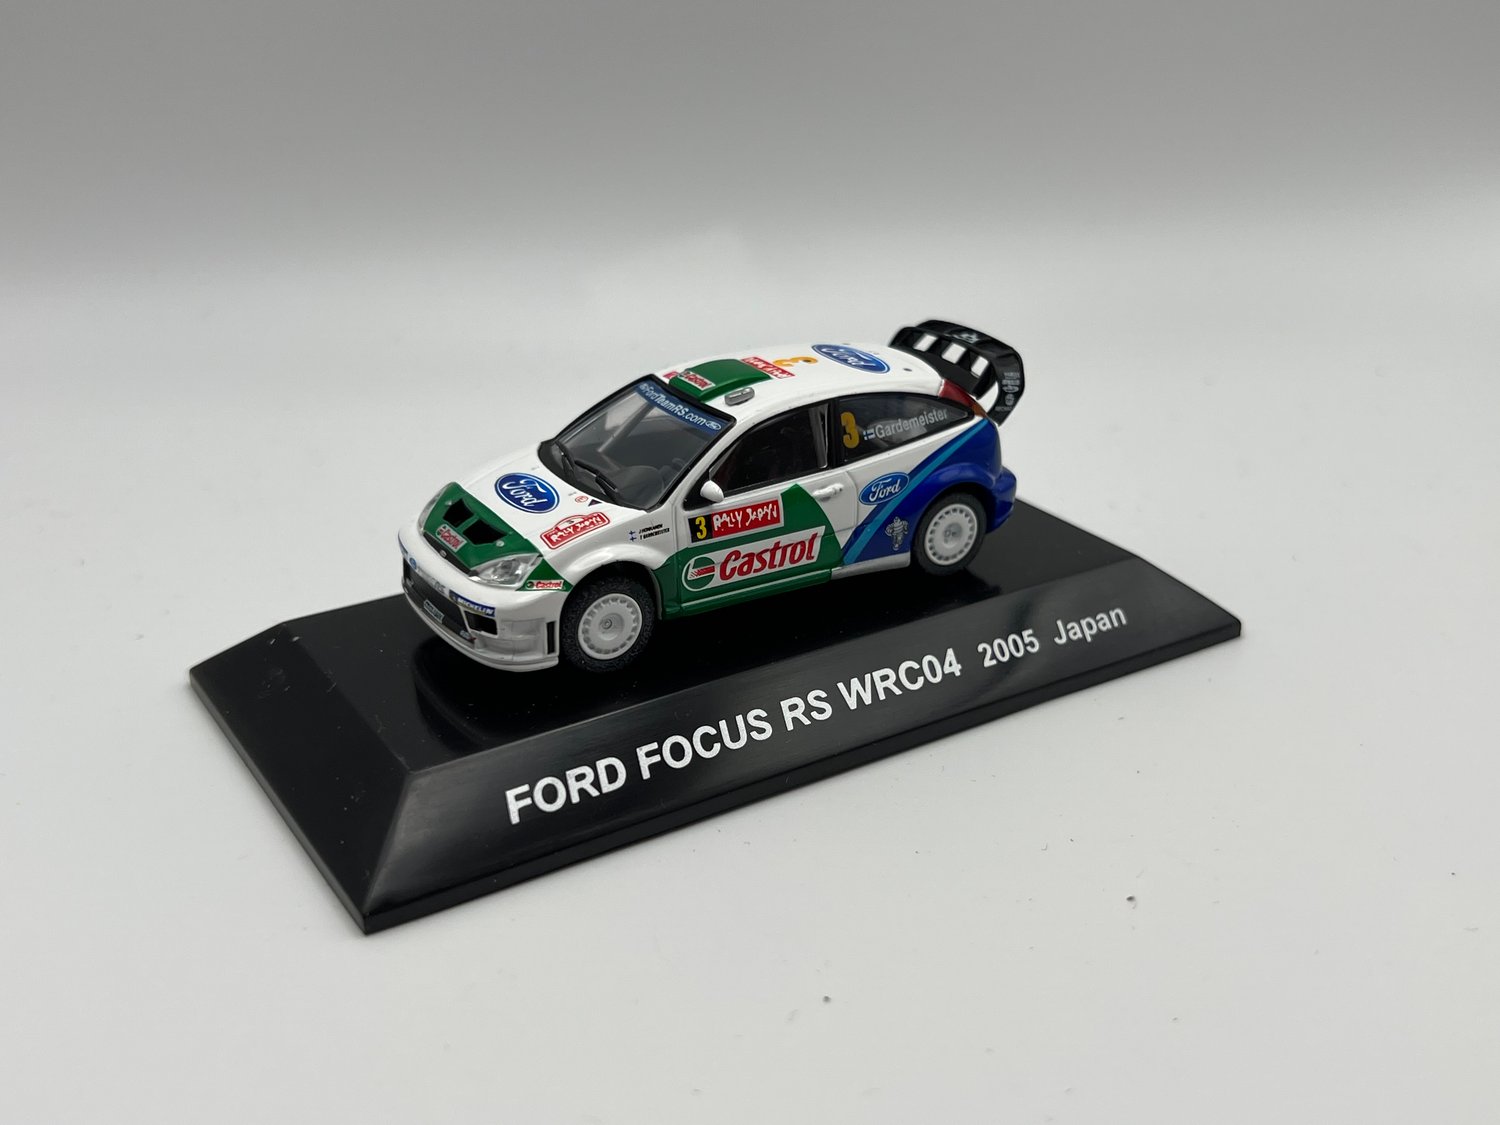 CM's Ford Focus WRC 2005 Japan 